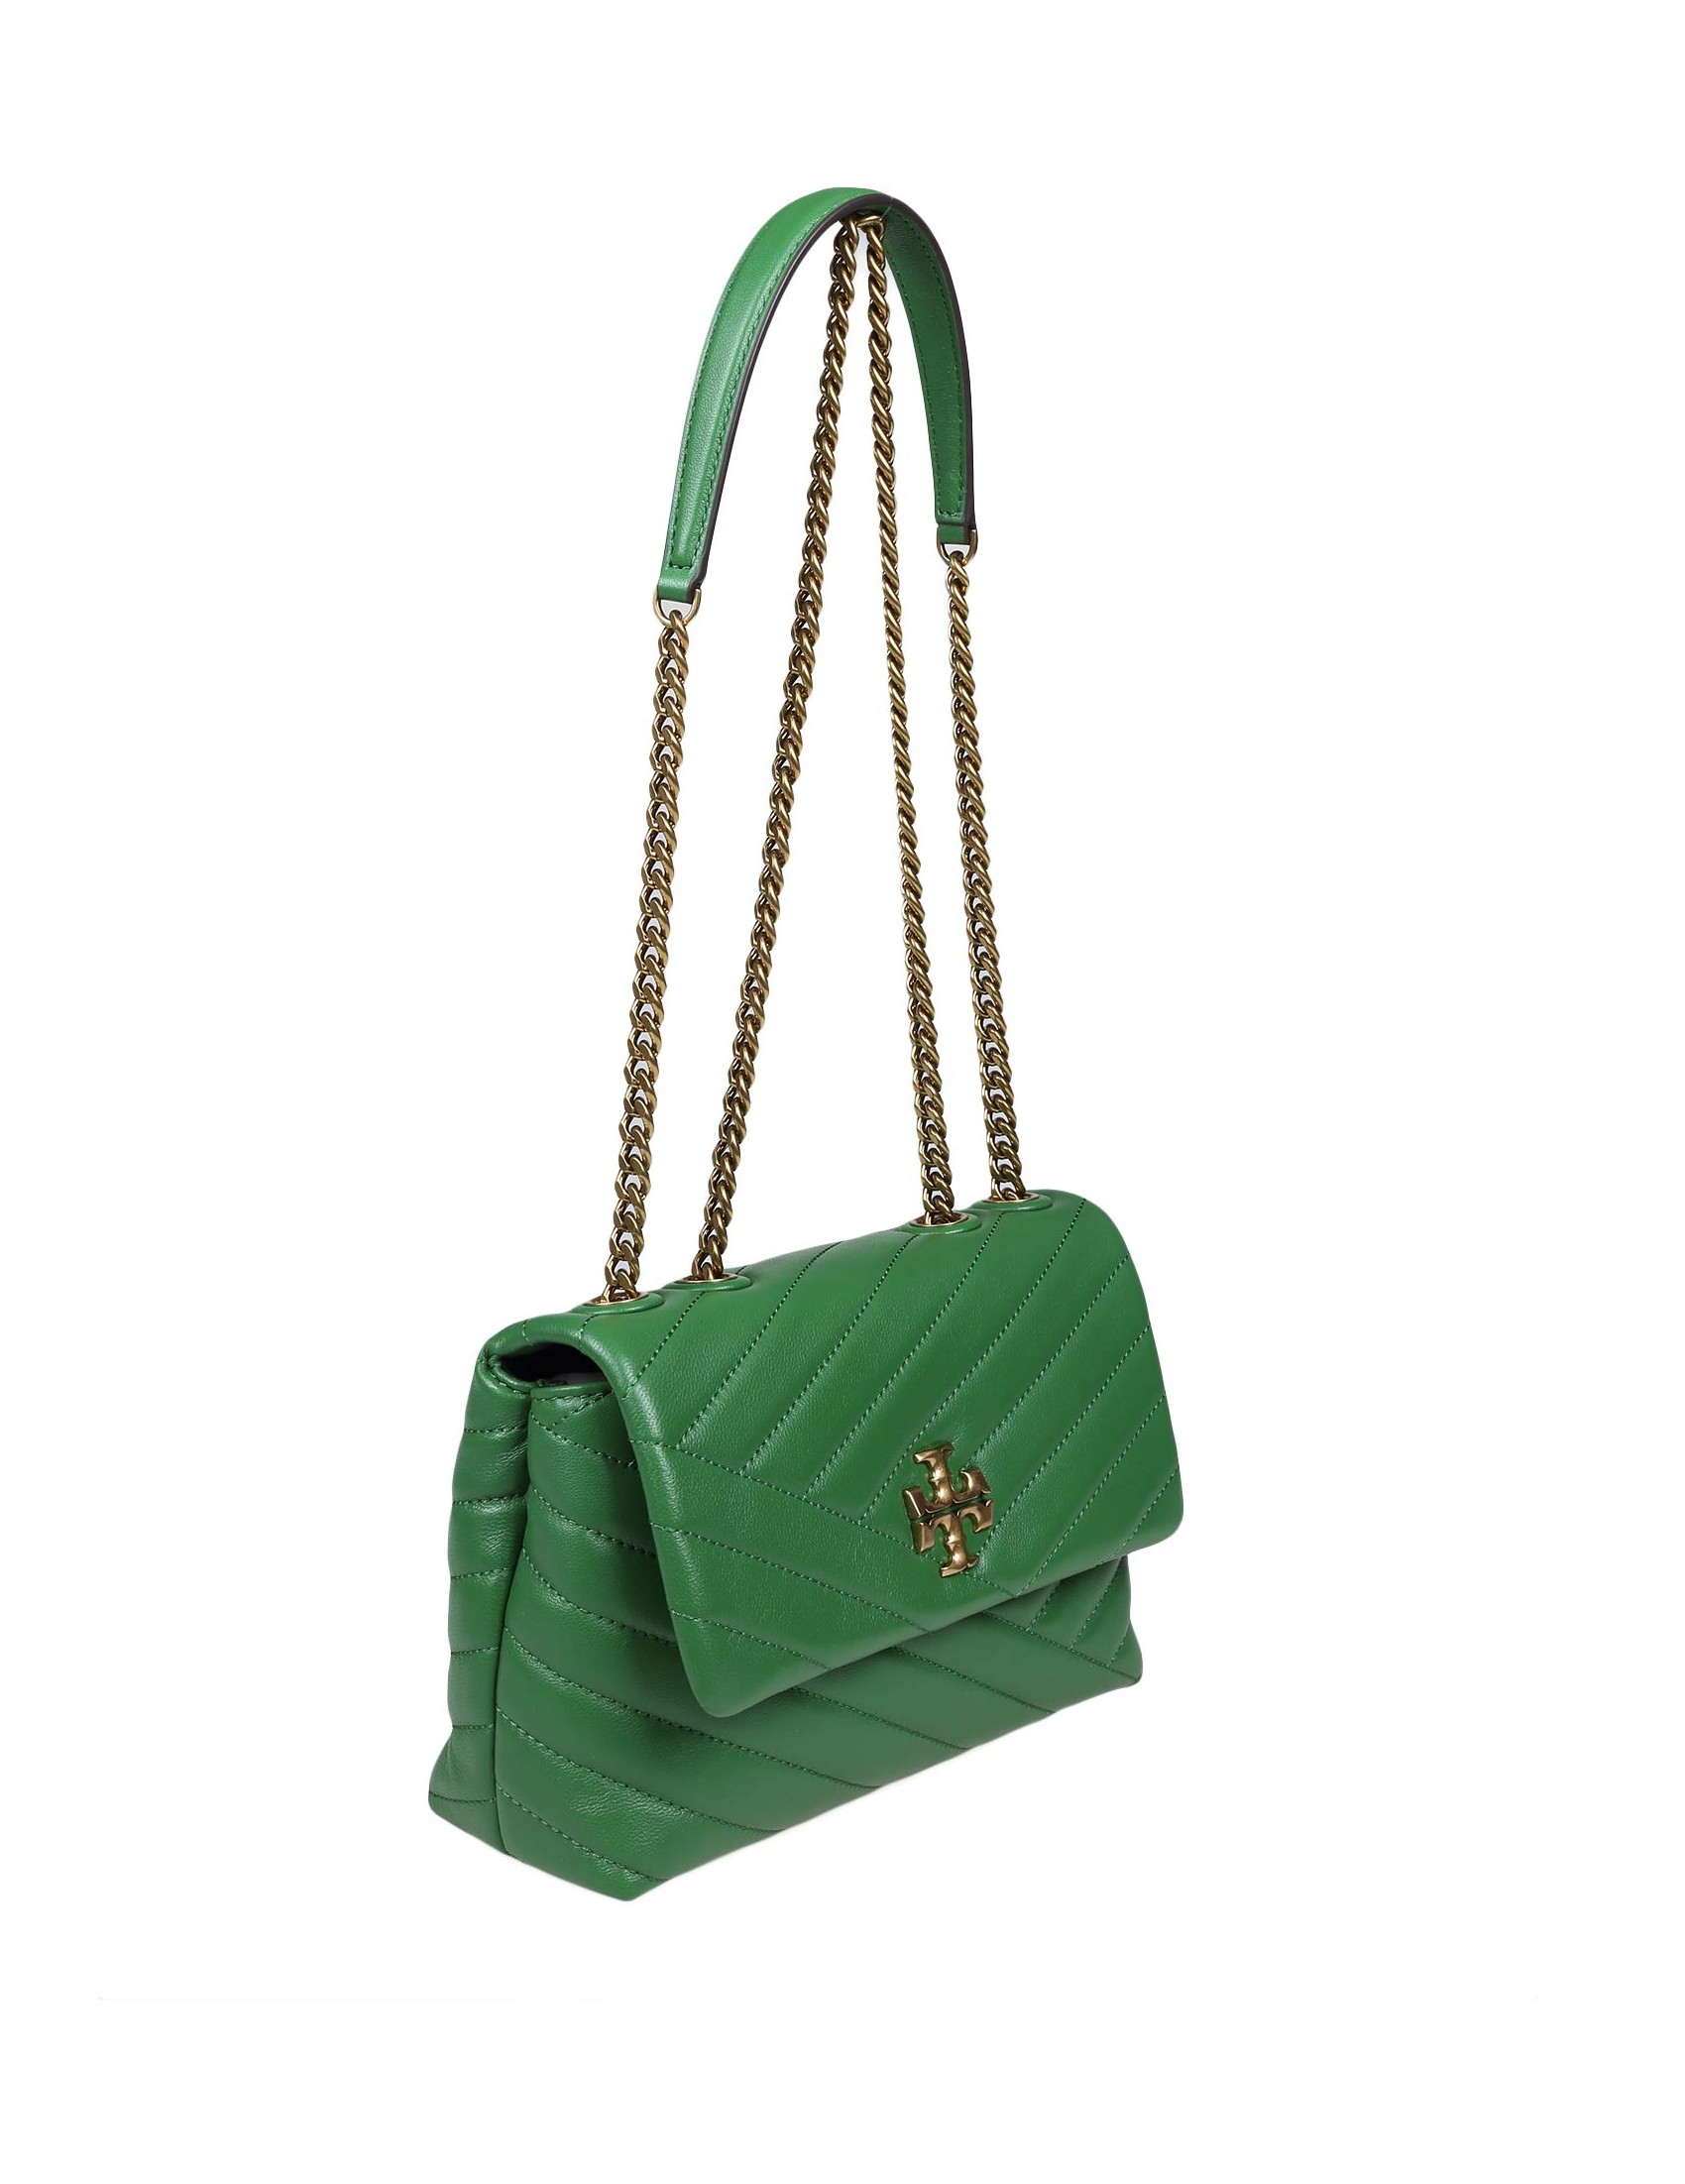 Tory Burch 90452 KIRA CHEVRON SMALL CONVERTIBLE SHOULDER Bag Green